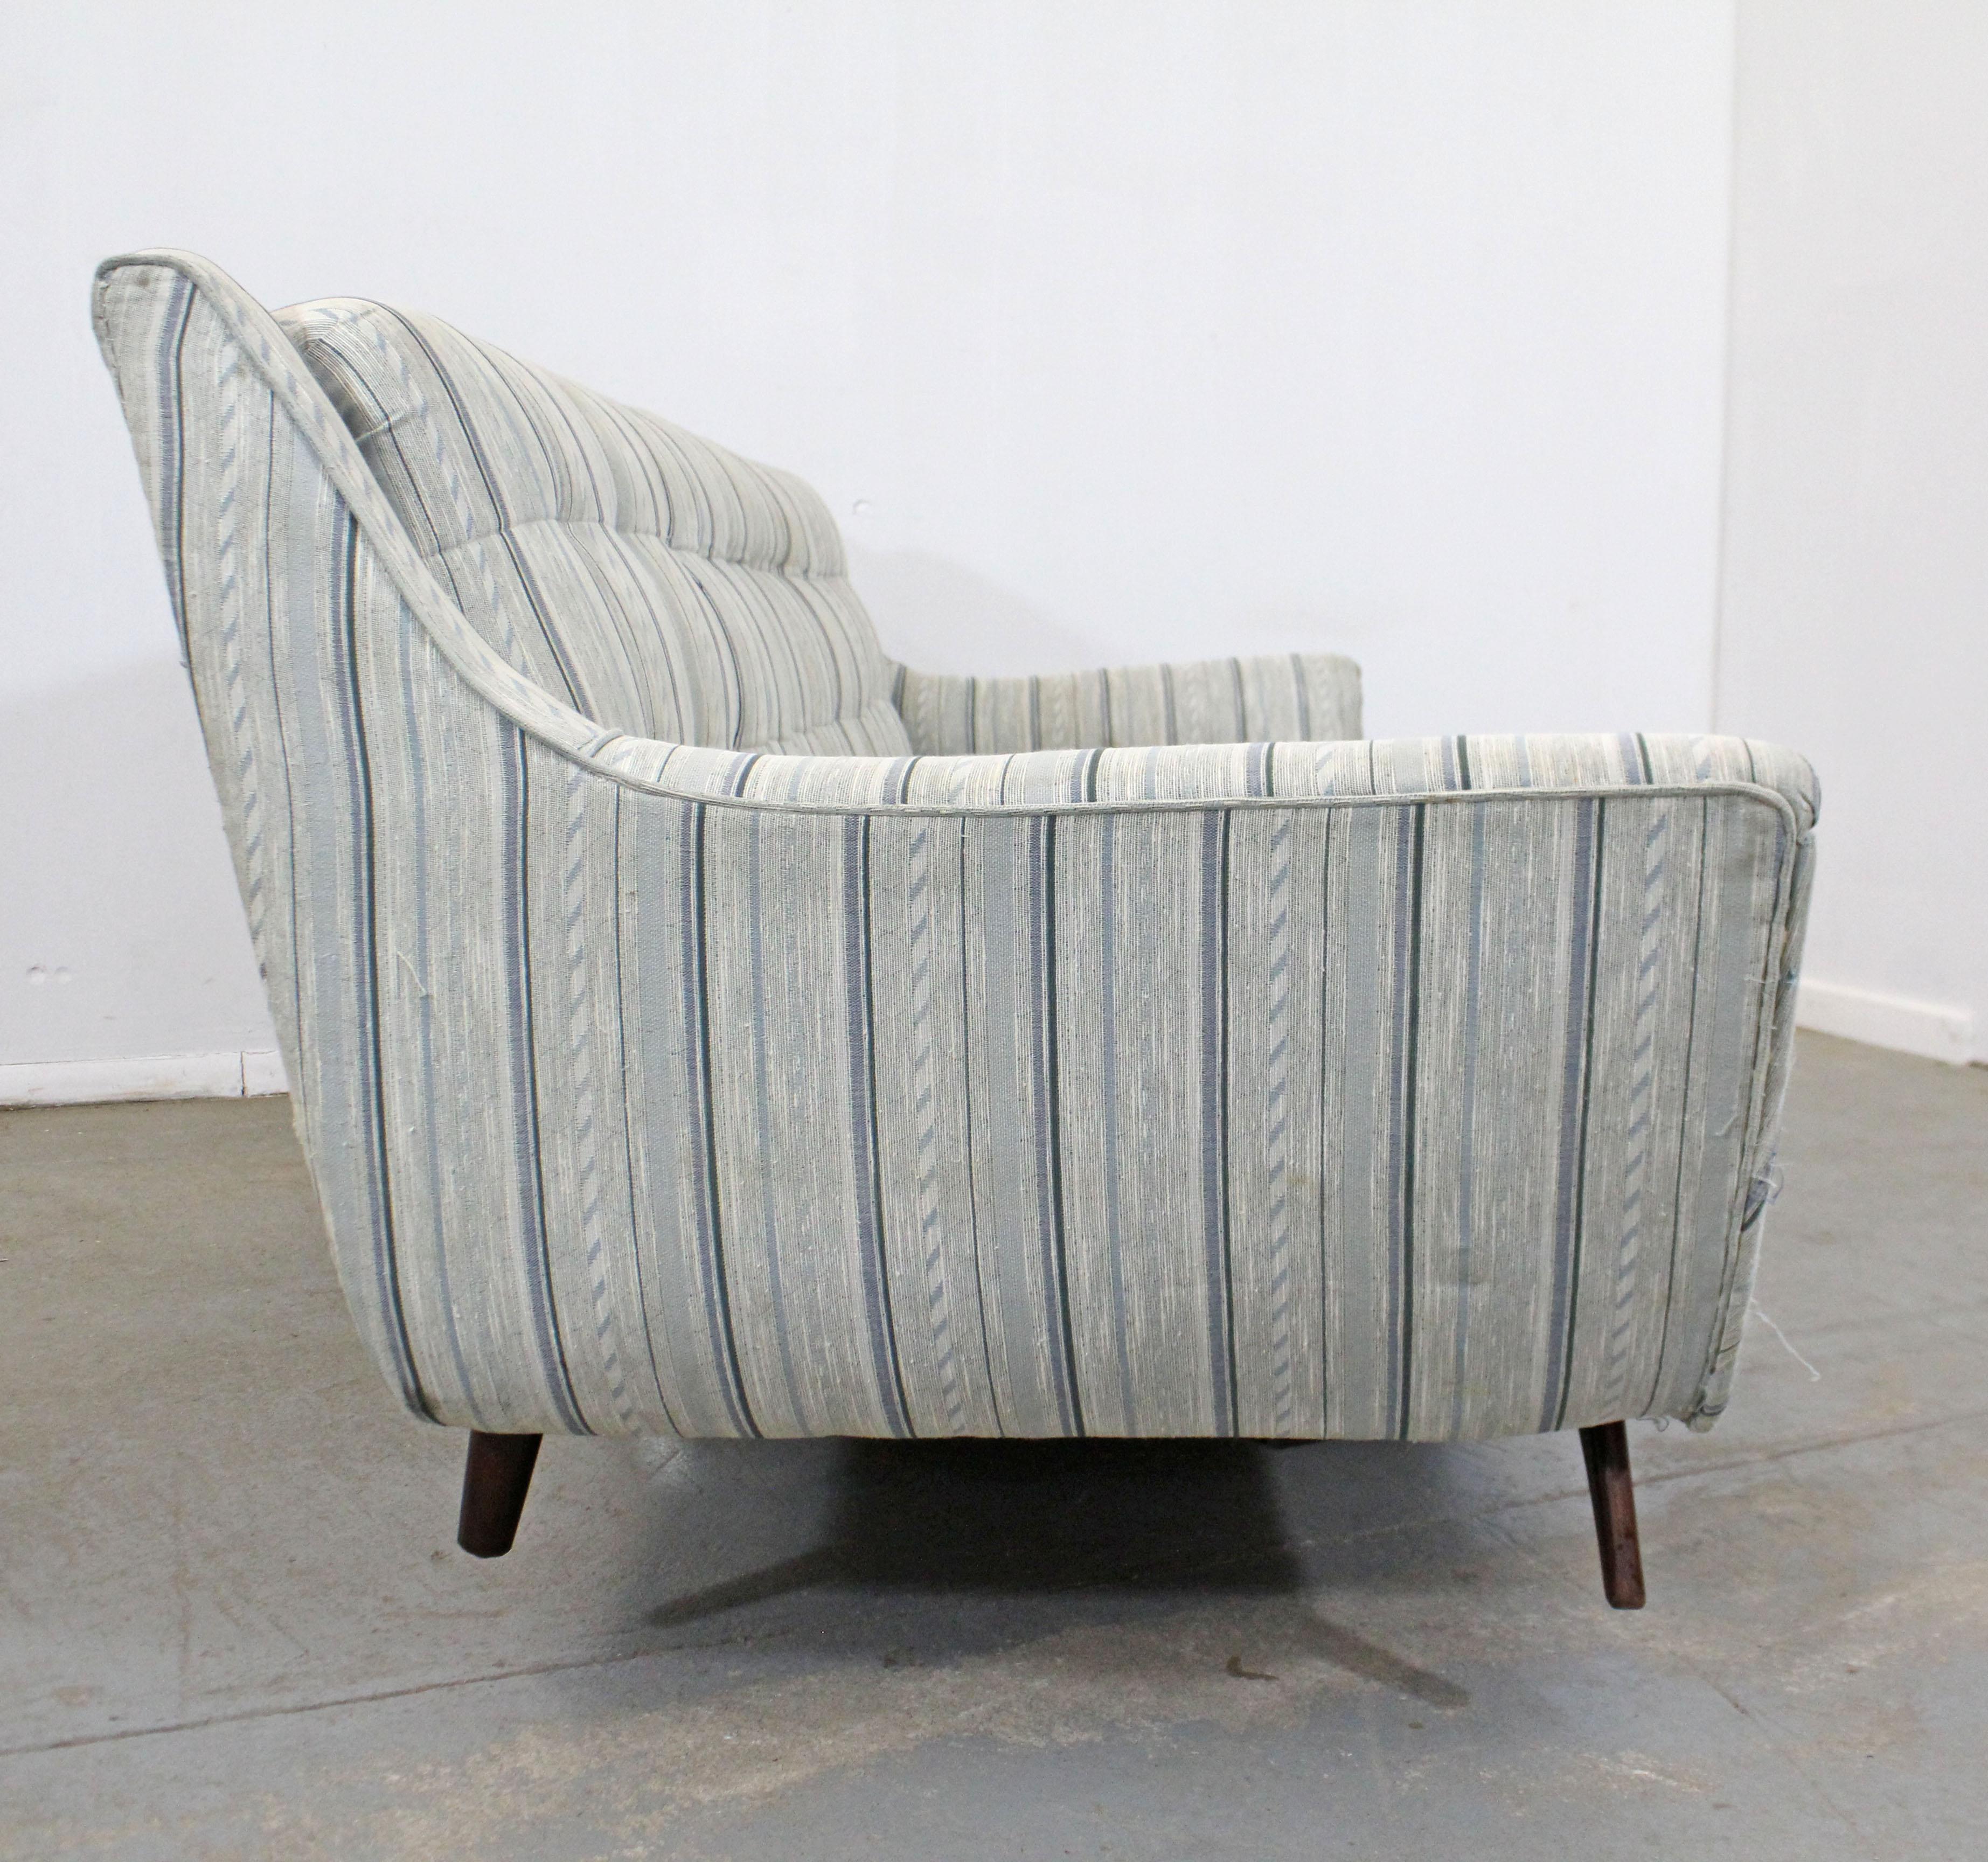 20th Century Mid-Century Modern Kroehler Adrian Pearsall Style Sofa